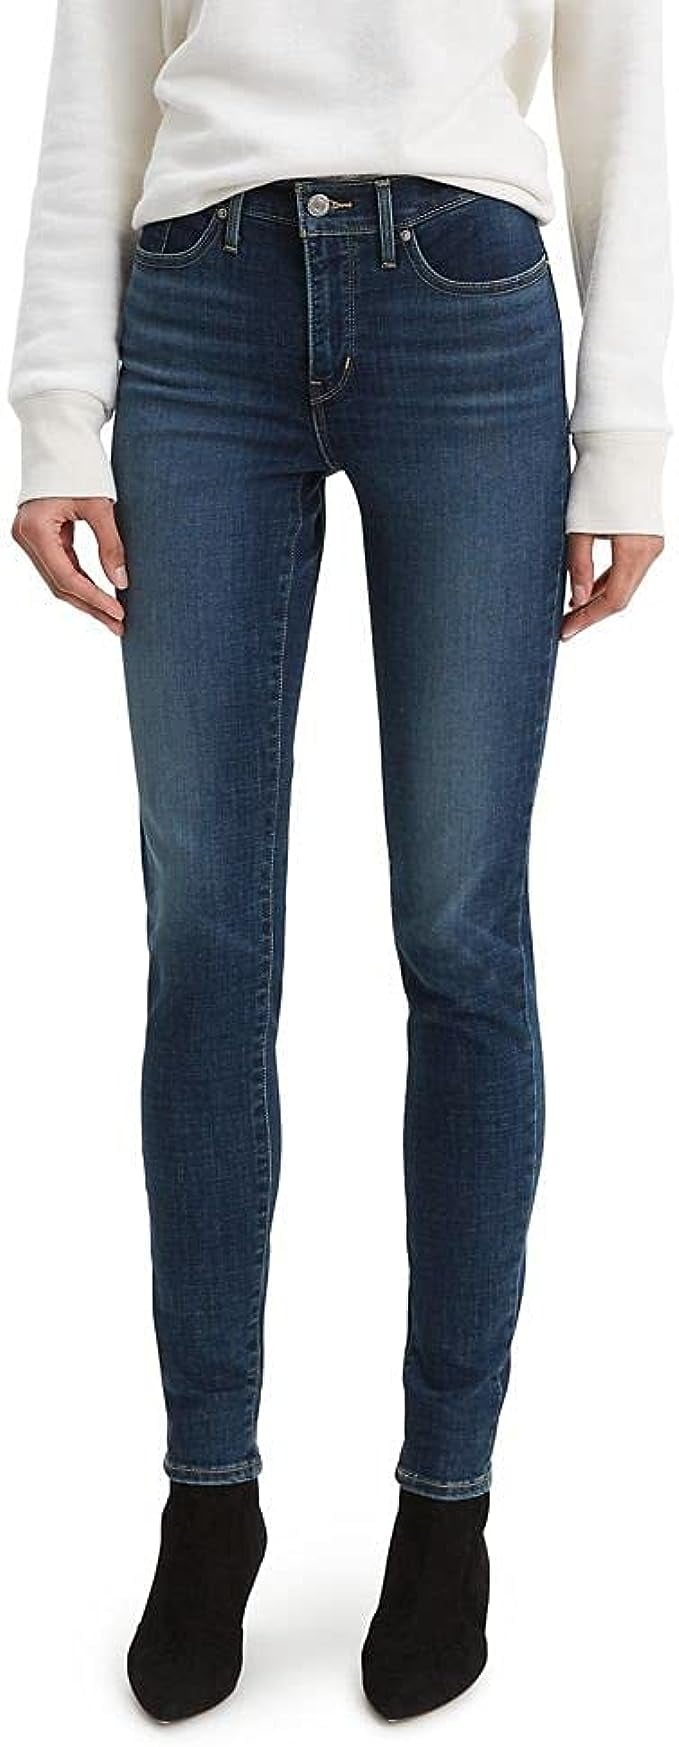 Shop a Similar Version of Kate Middleton's Skinny Jeans